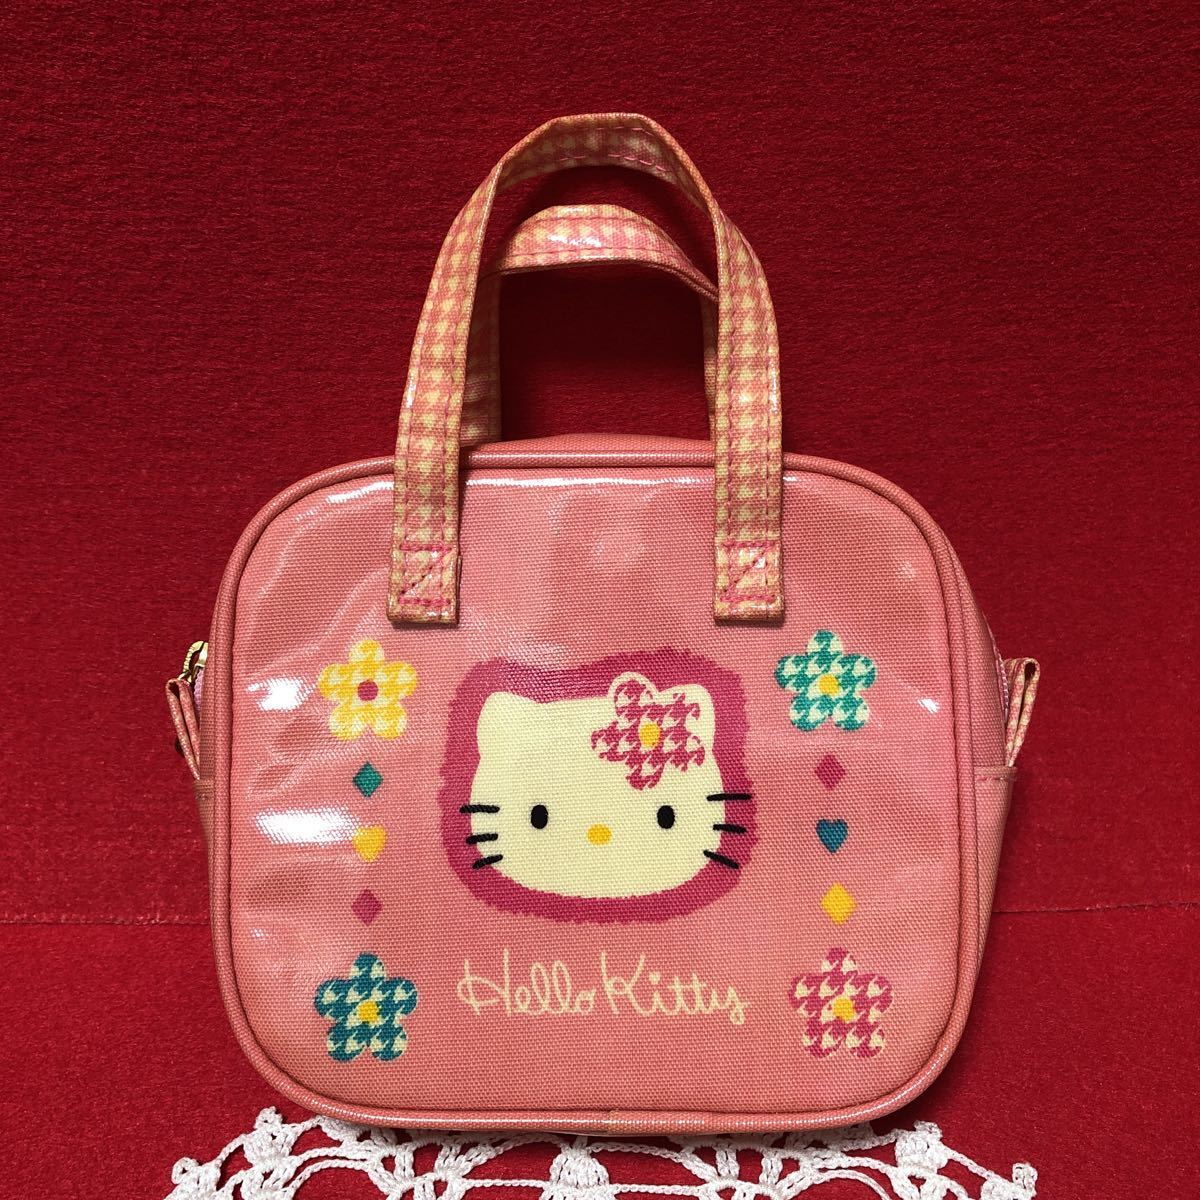  Kitty * Hello Kitty * Kitty Chan * hand .. pouch Mini bag *1997 year * flower flower * retro 